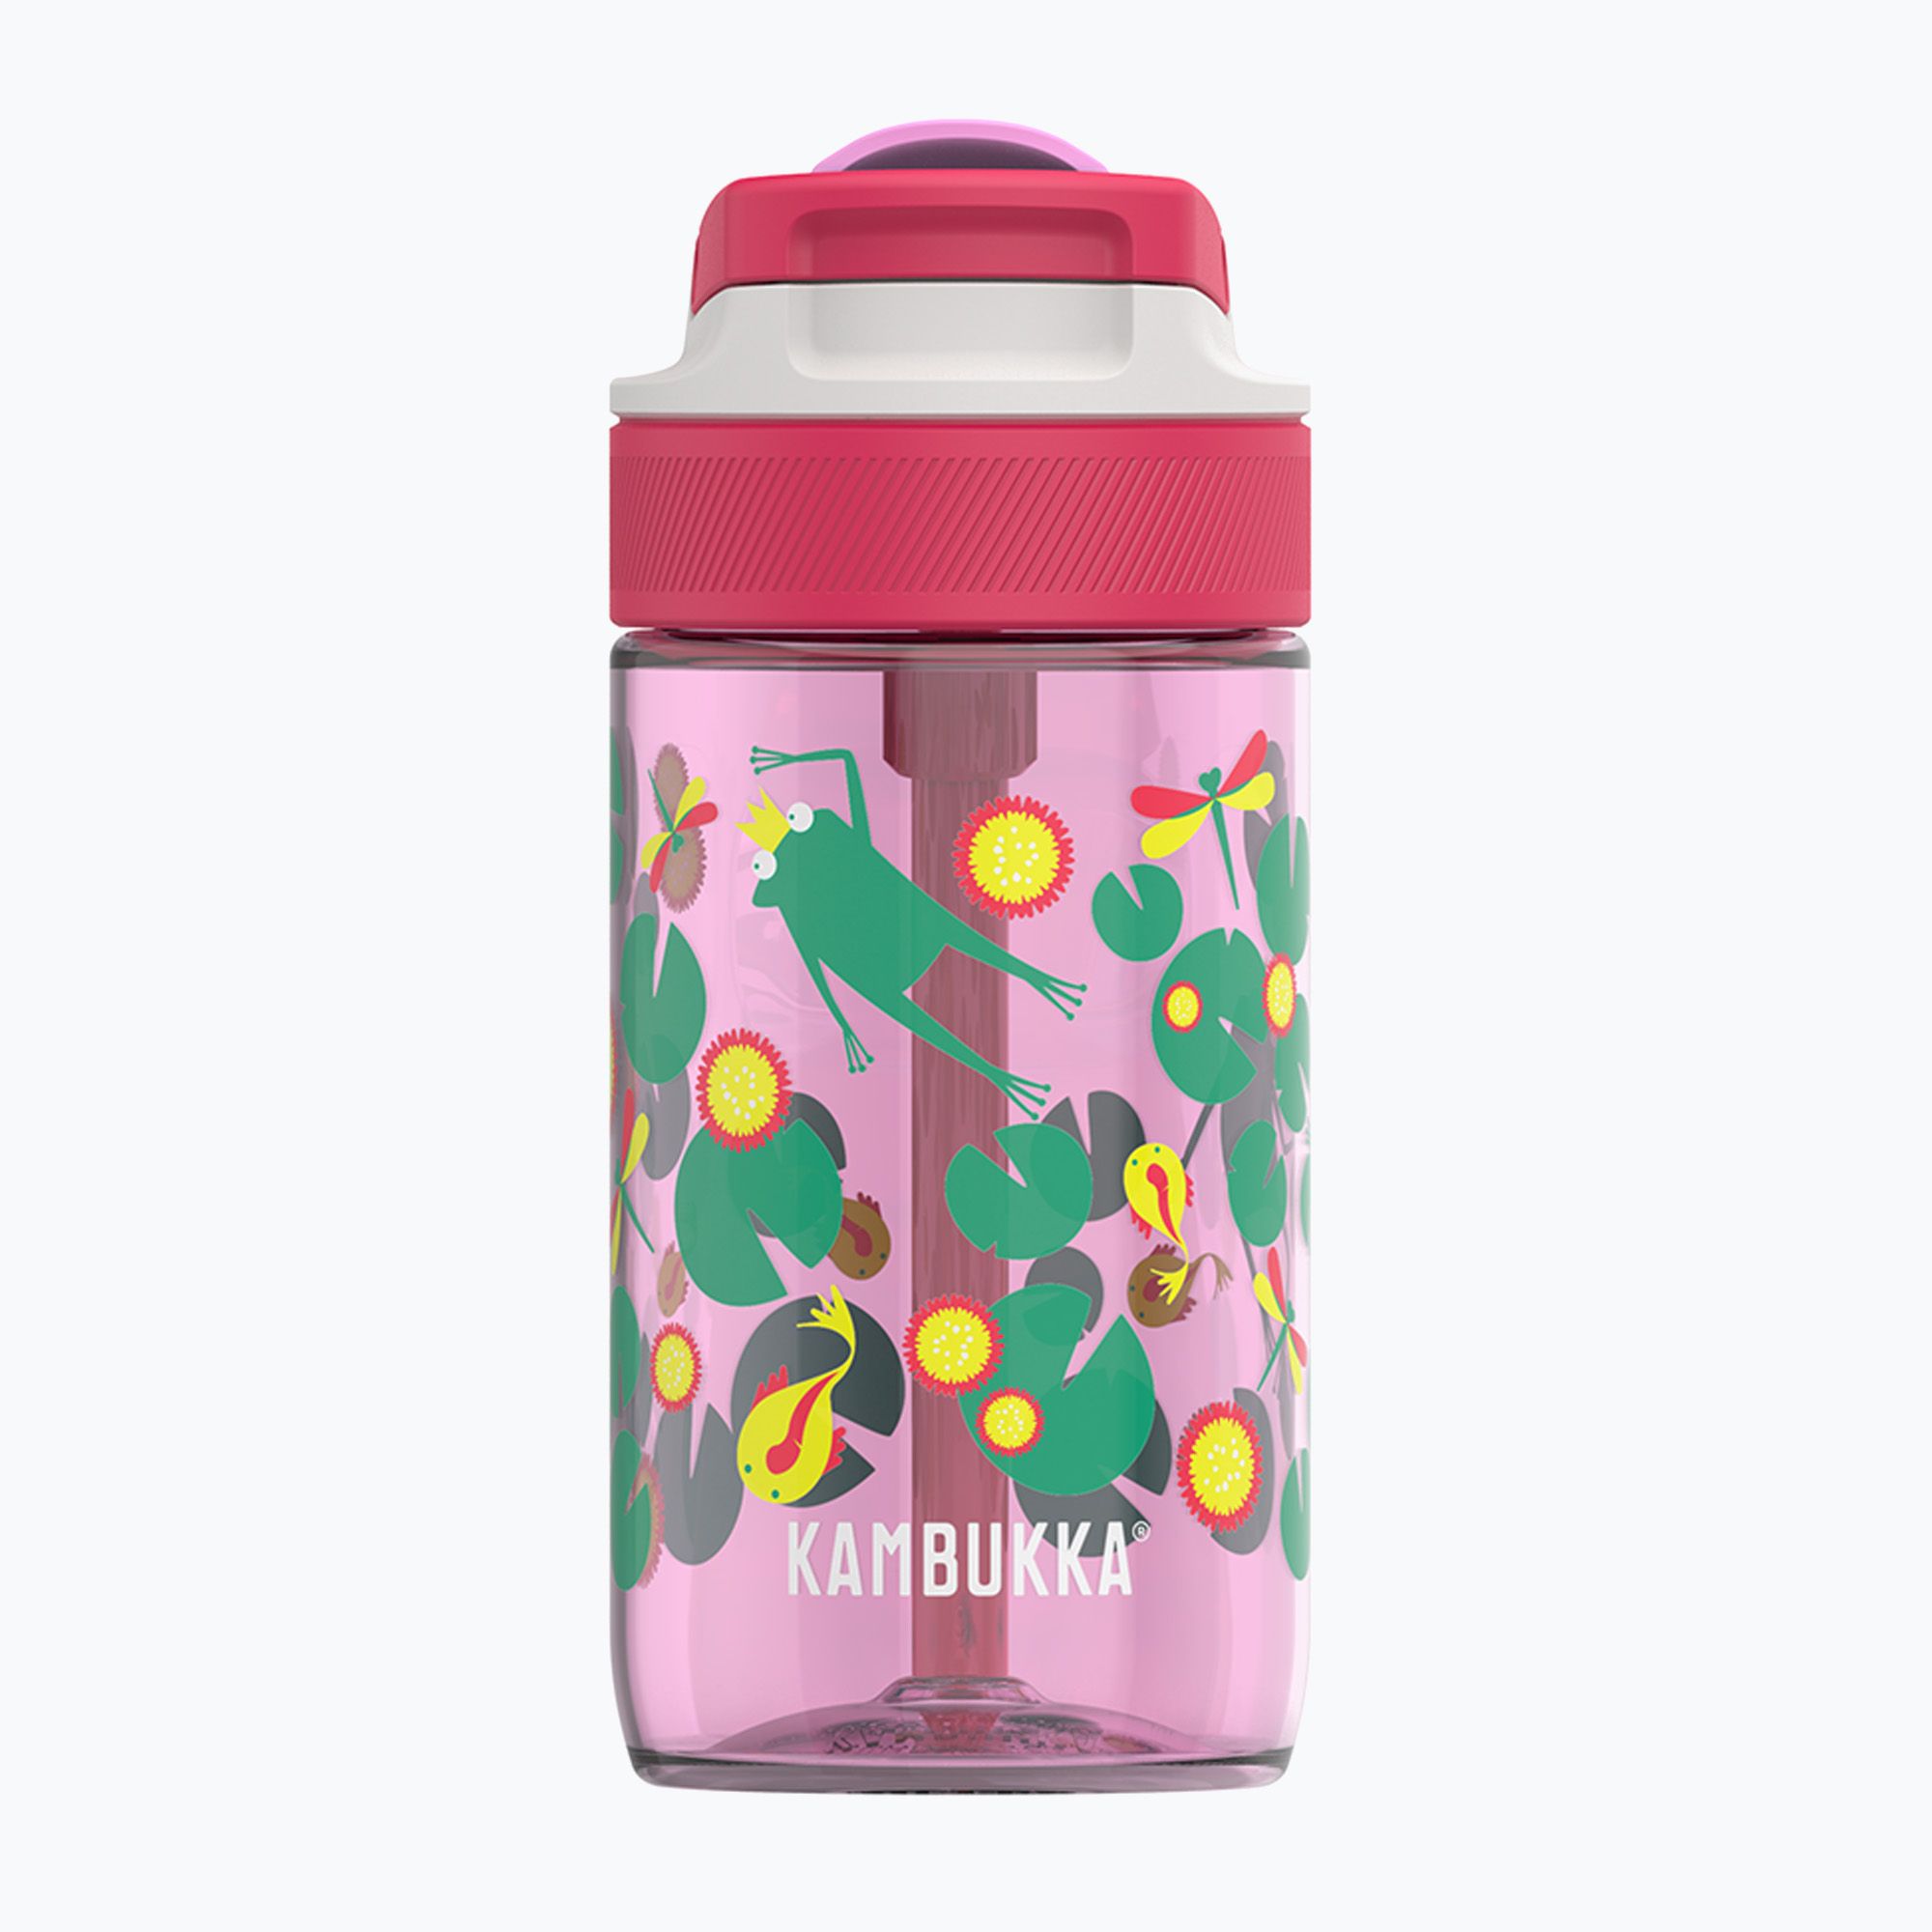 Reusable waterbottles, coffee mugs & kids bottles of Kambukka.